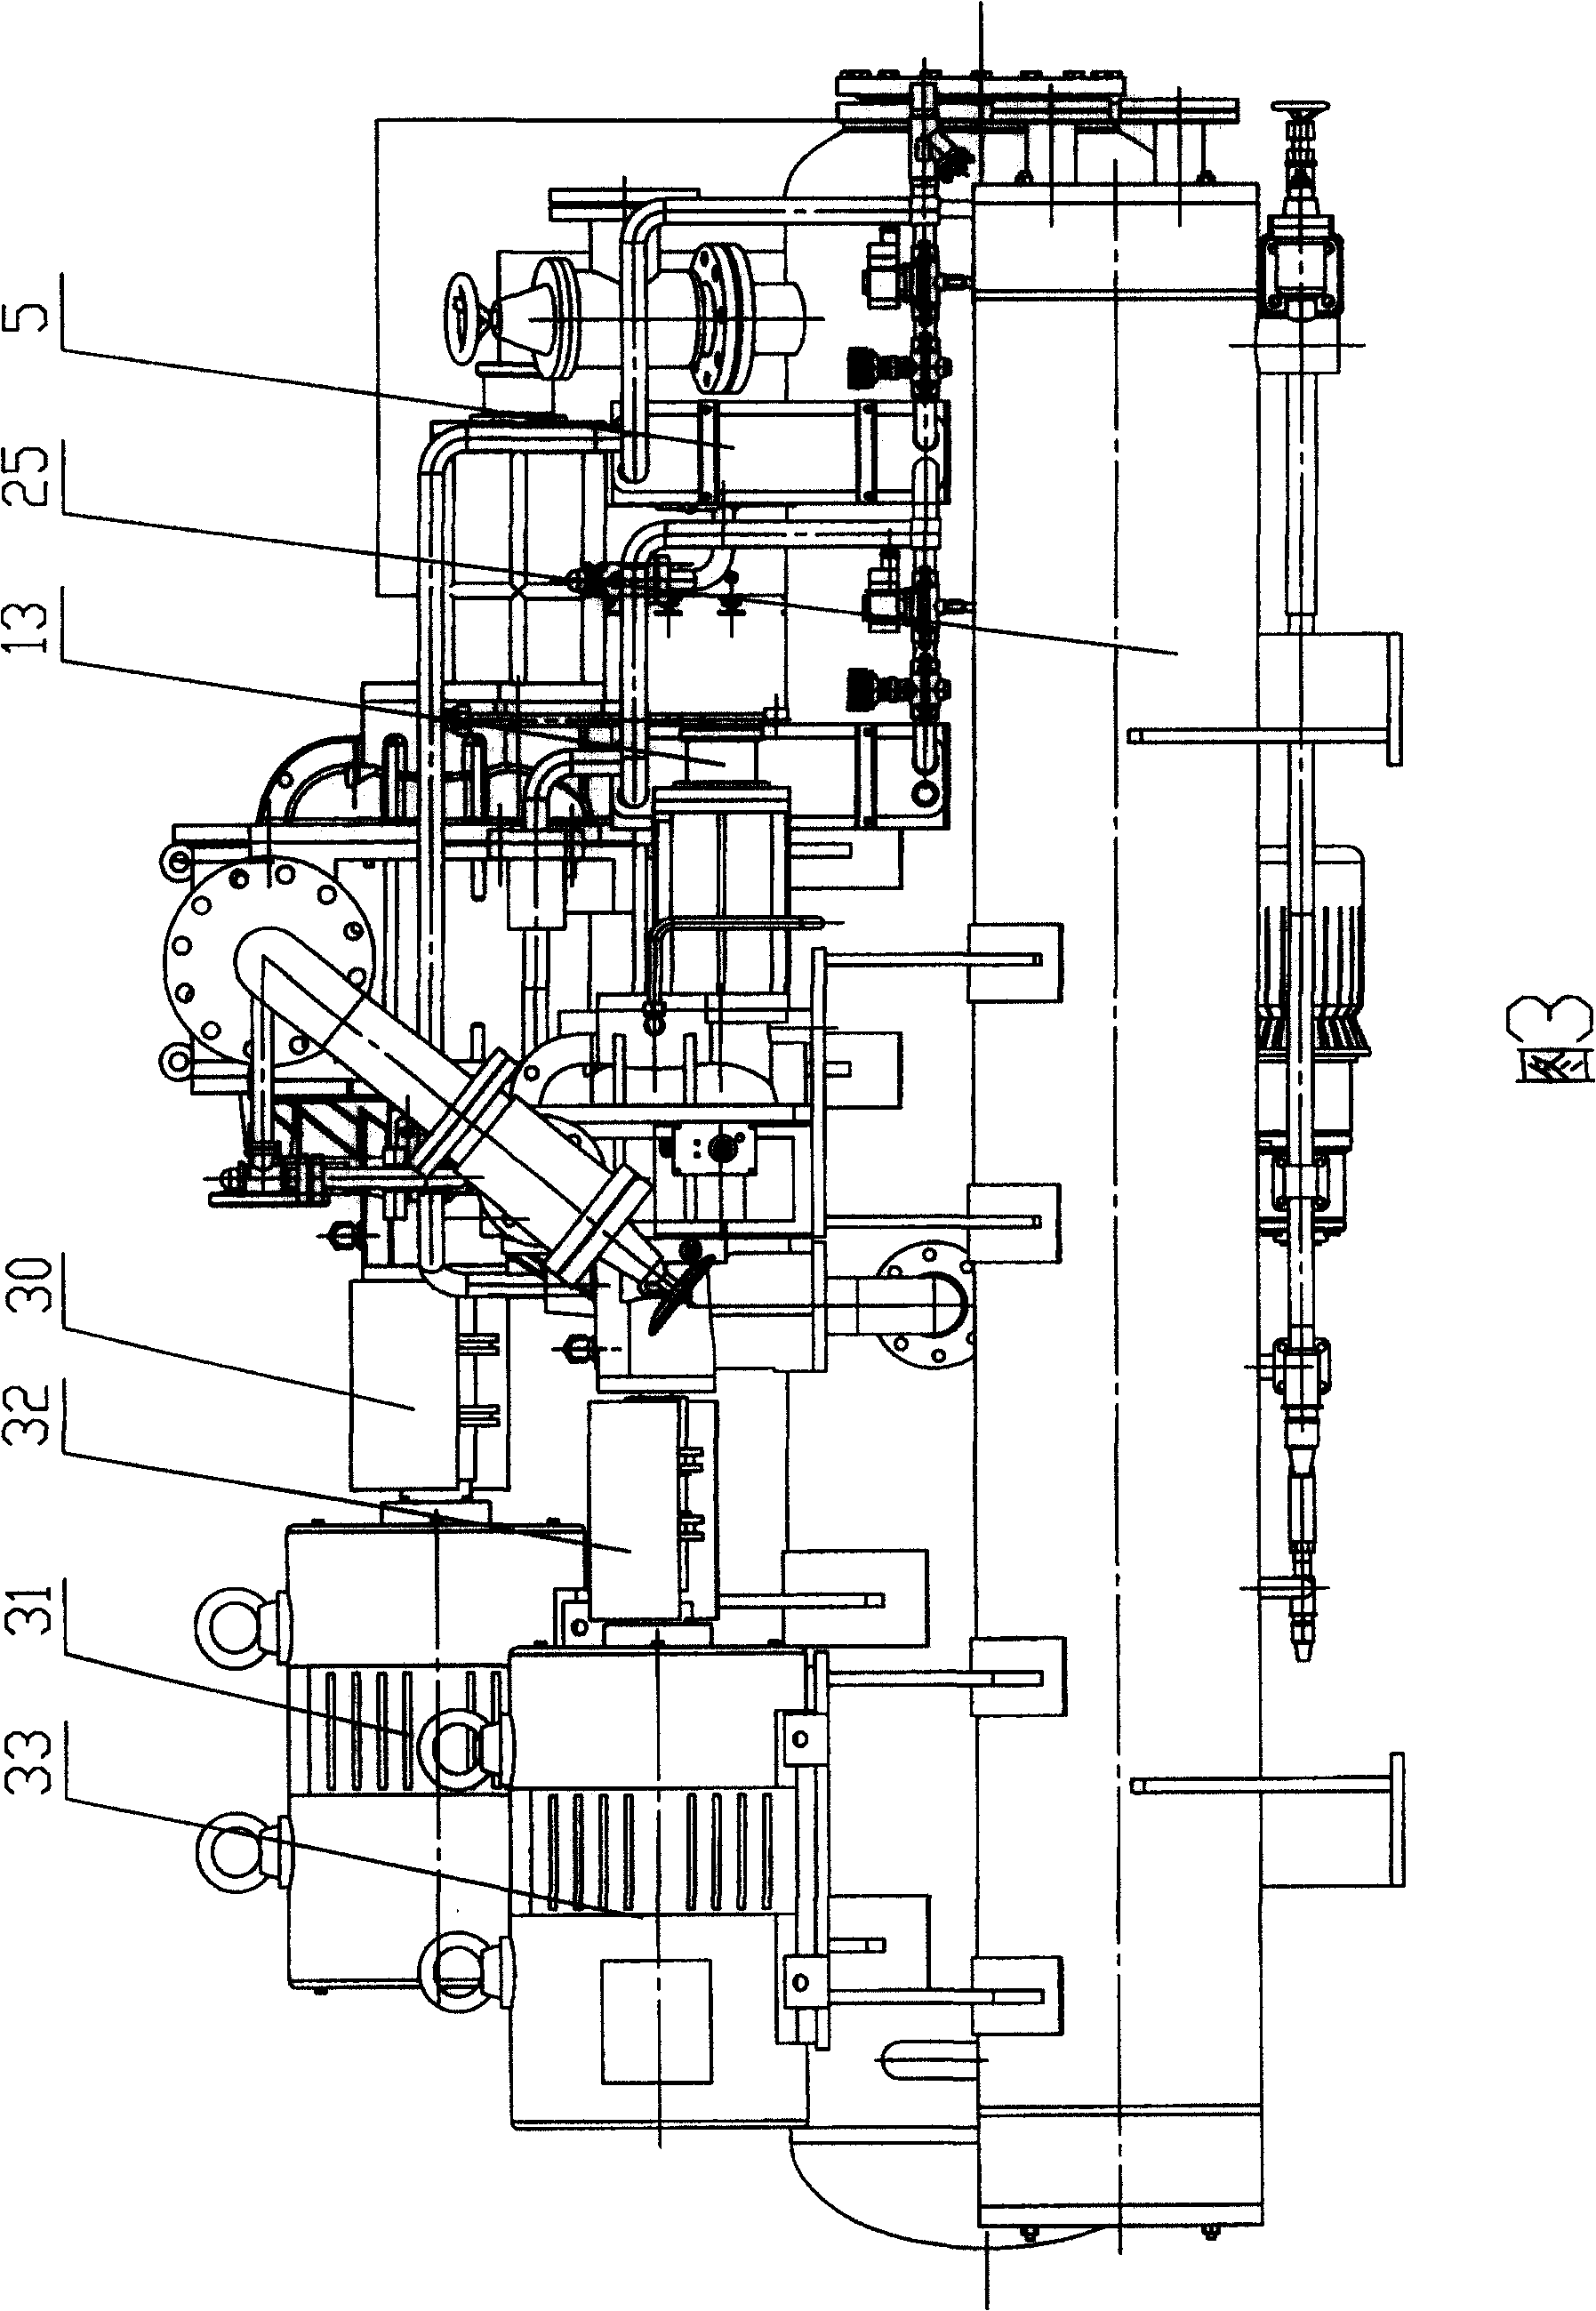 Dual-locomotive and dual-stage screw refrigerating compressor set